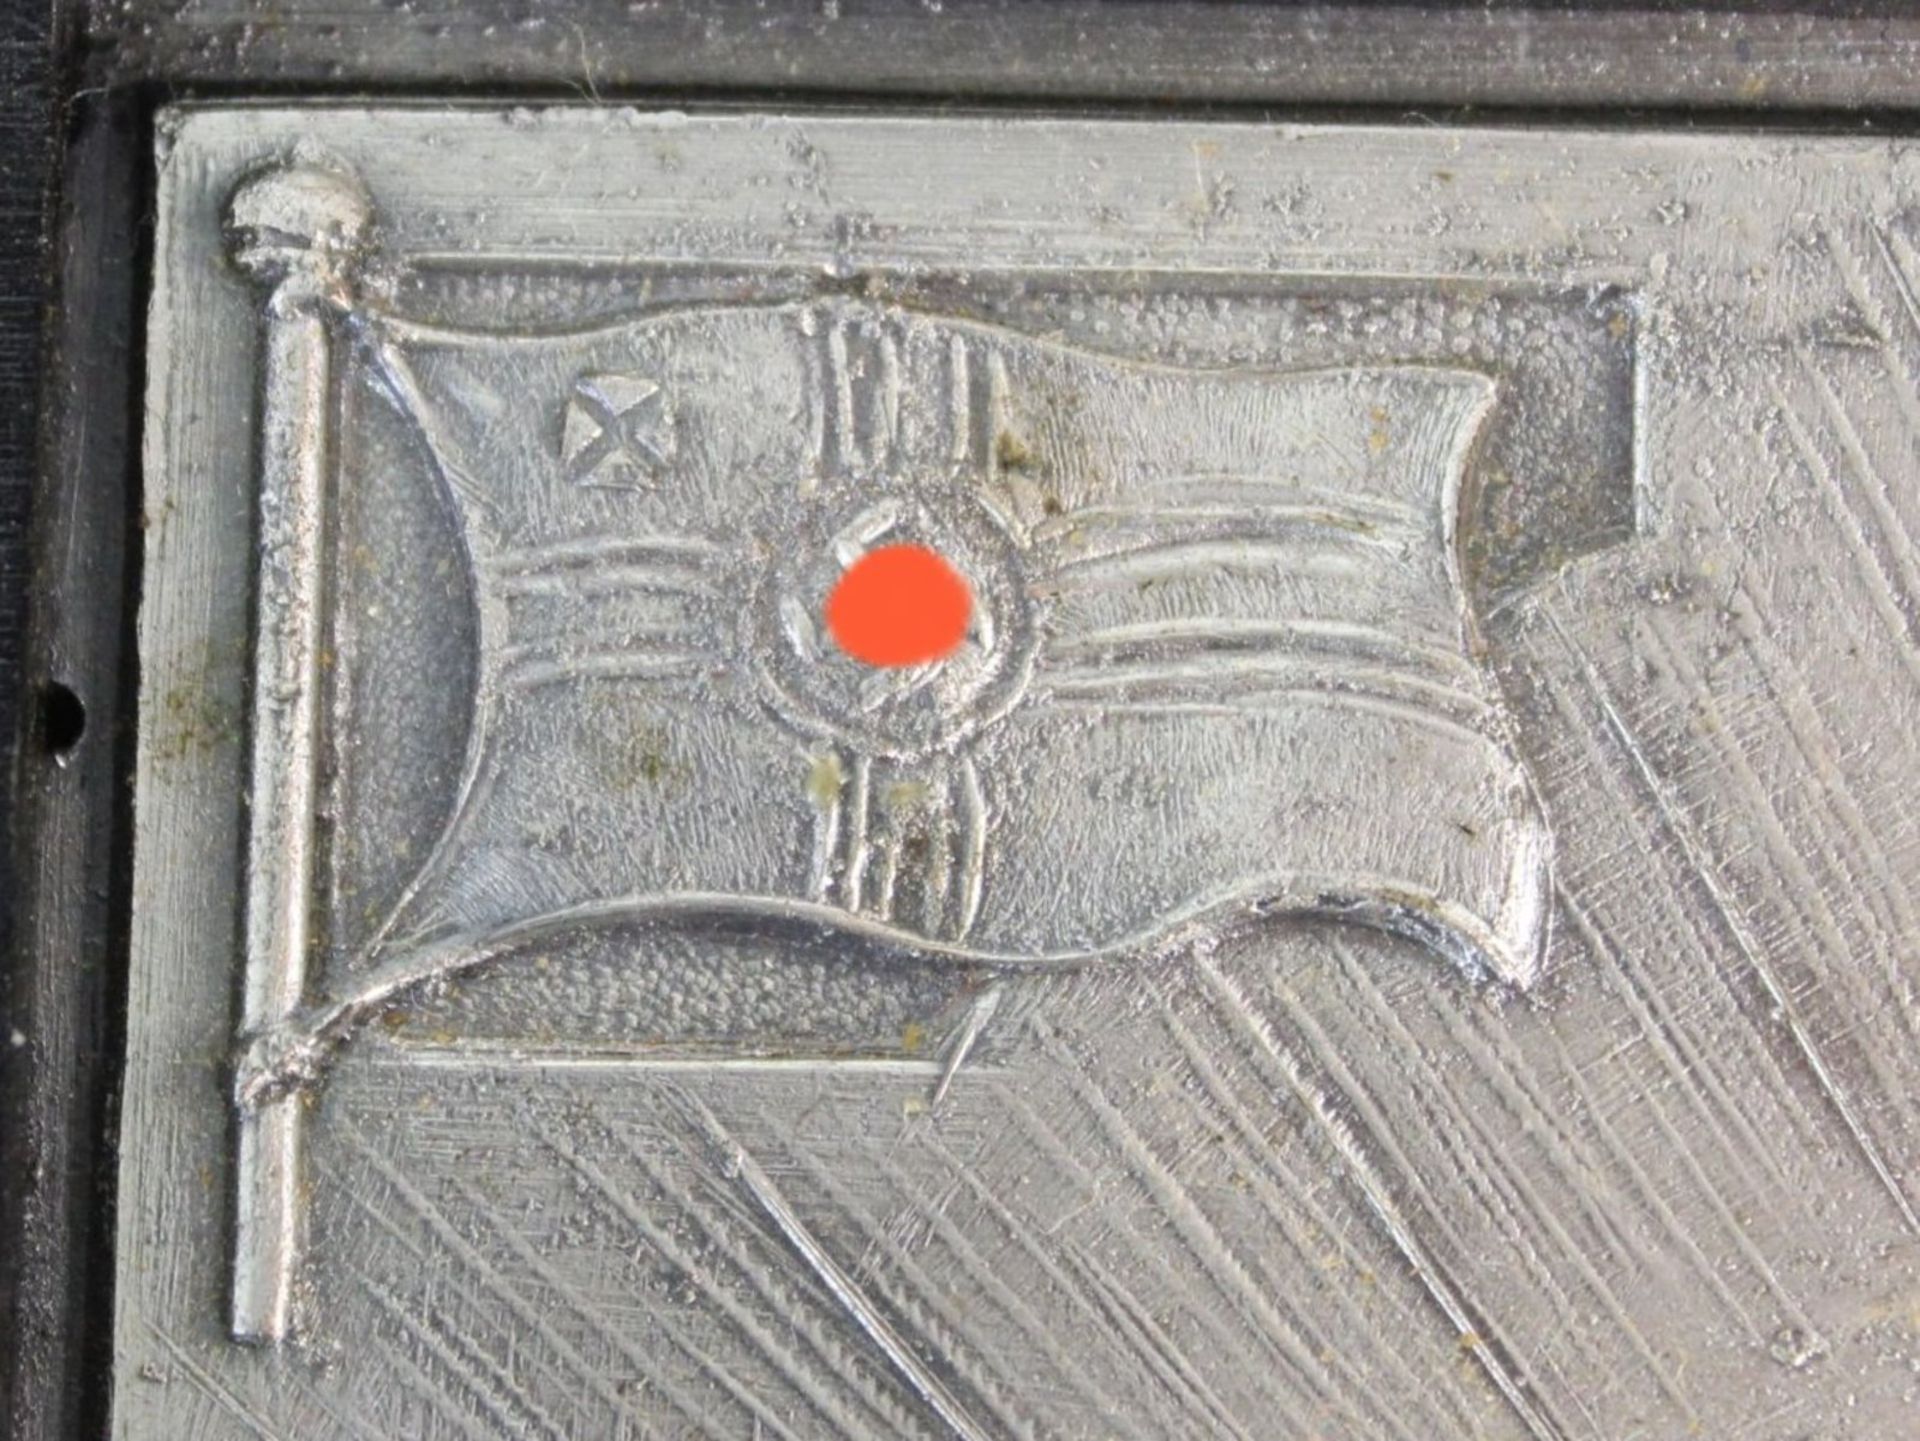 gerahmtes U-Boot- Relief, Vor Scapa Flow, monogrammiert "GB", 16 x 23,5cm. - Bild 3 aus 4